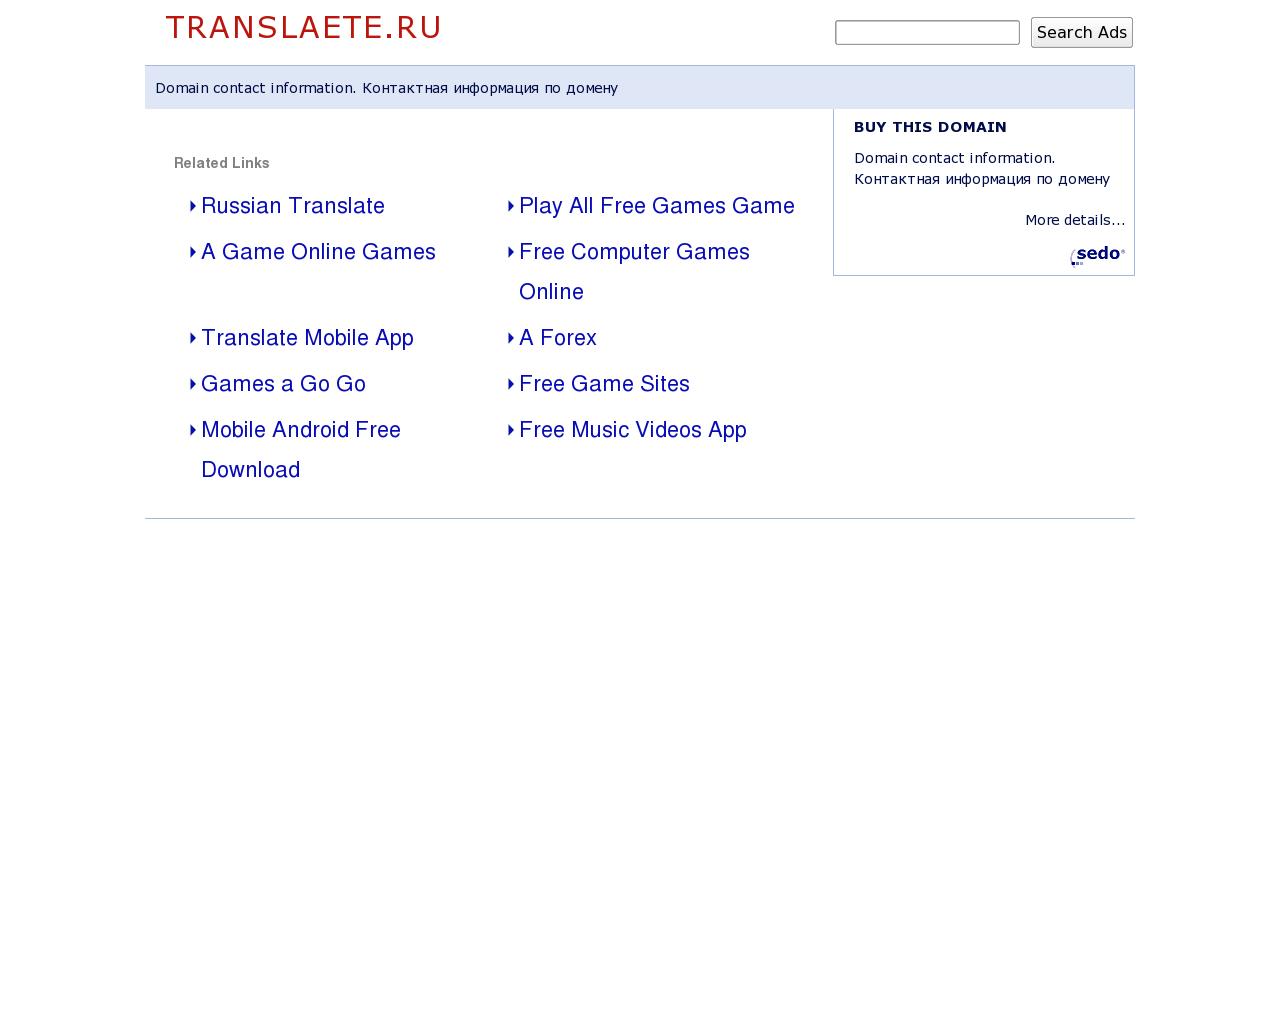 Изображение сайта translaete.ru в разрешении 1280x1024